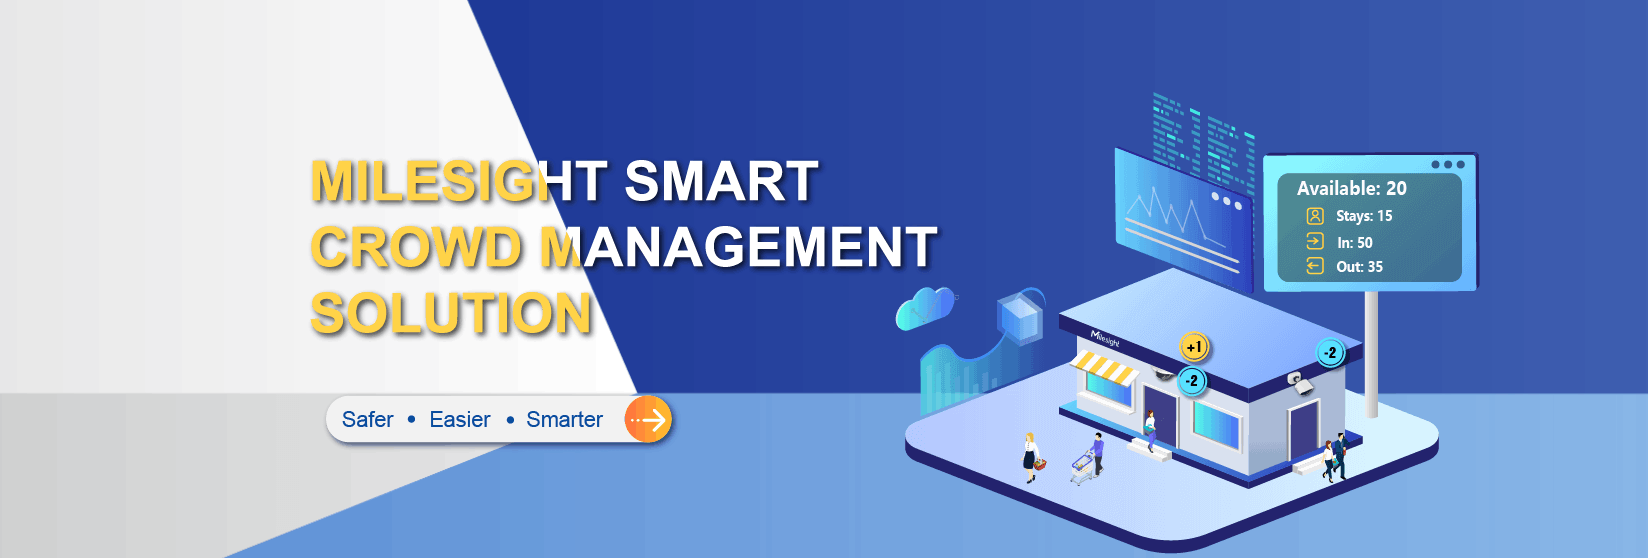 Milesight smart crowd management solution